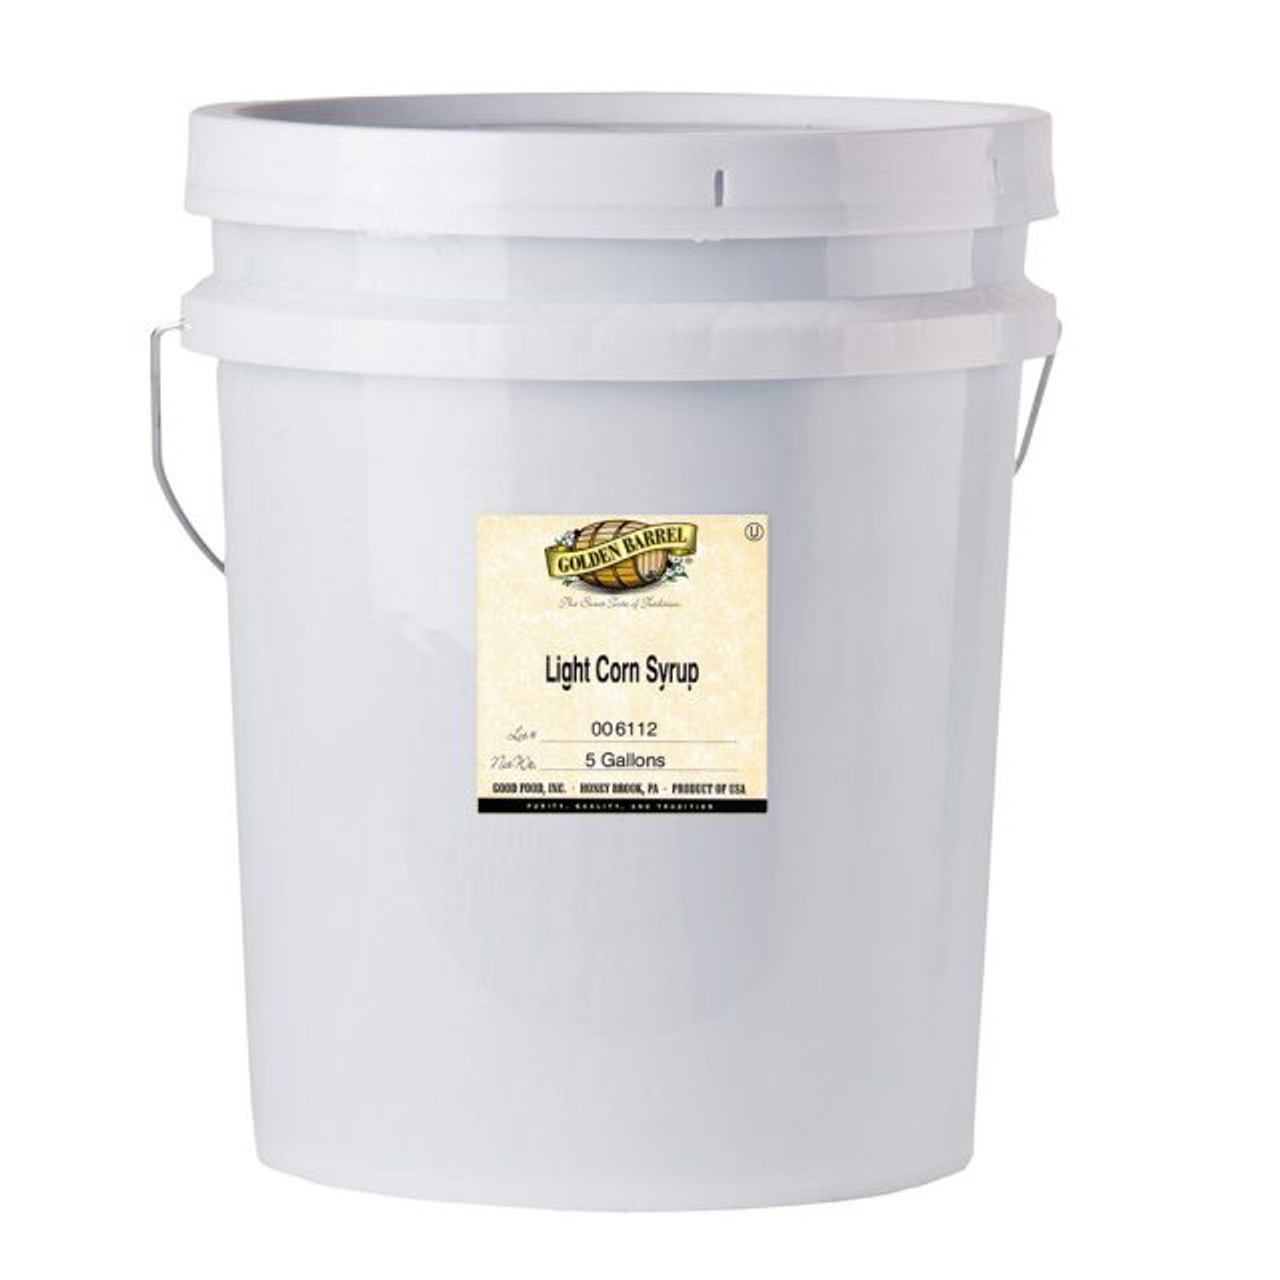 Golden Barrel Light Corn Syrup - 5 Gallon Bulk Food Service I Pallet of 36 I Total 72 Gallons - Chicken Pieces